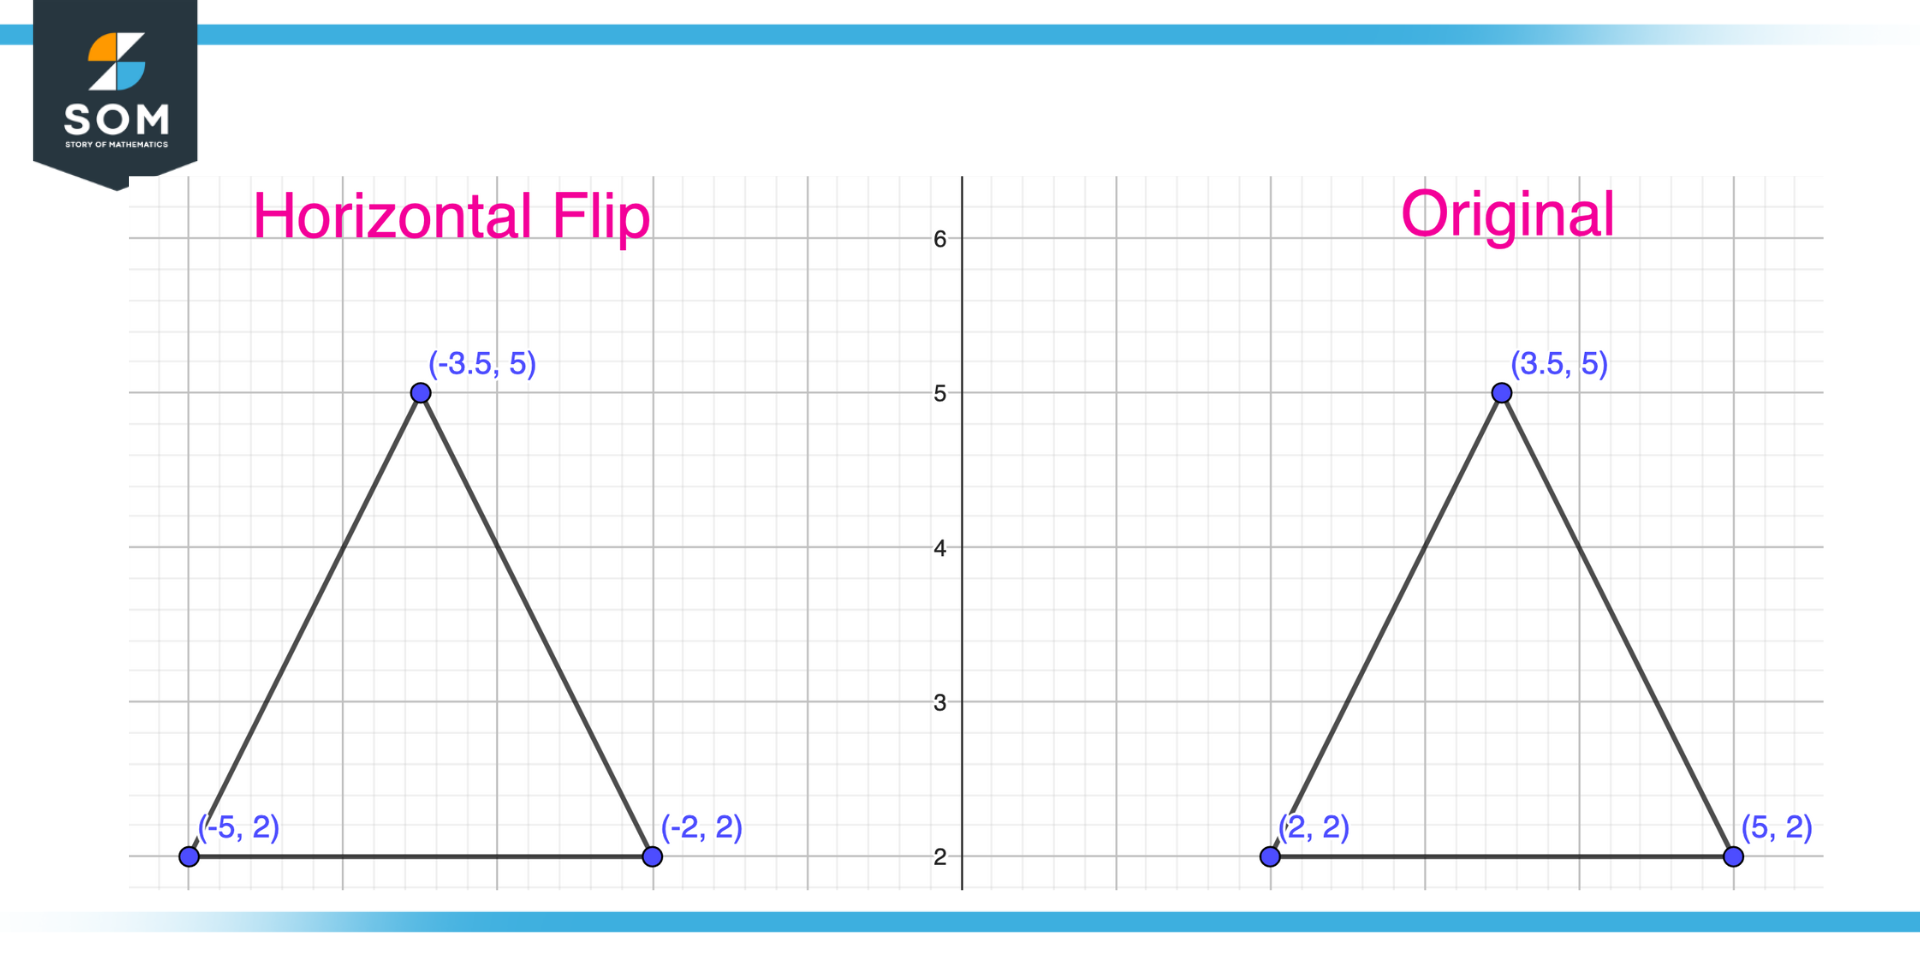 Example of Horizontally flipping a triangle